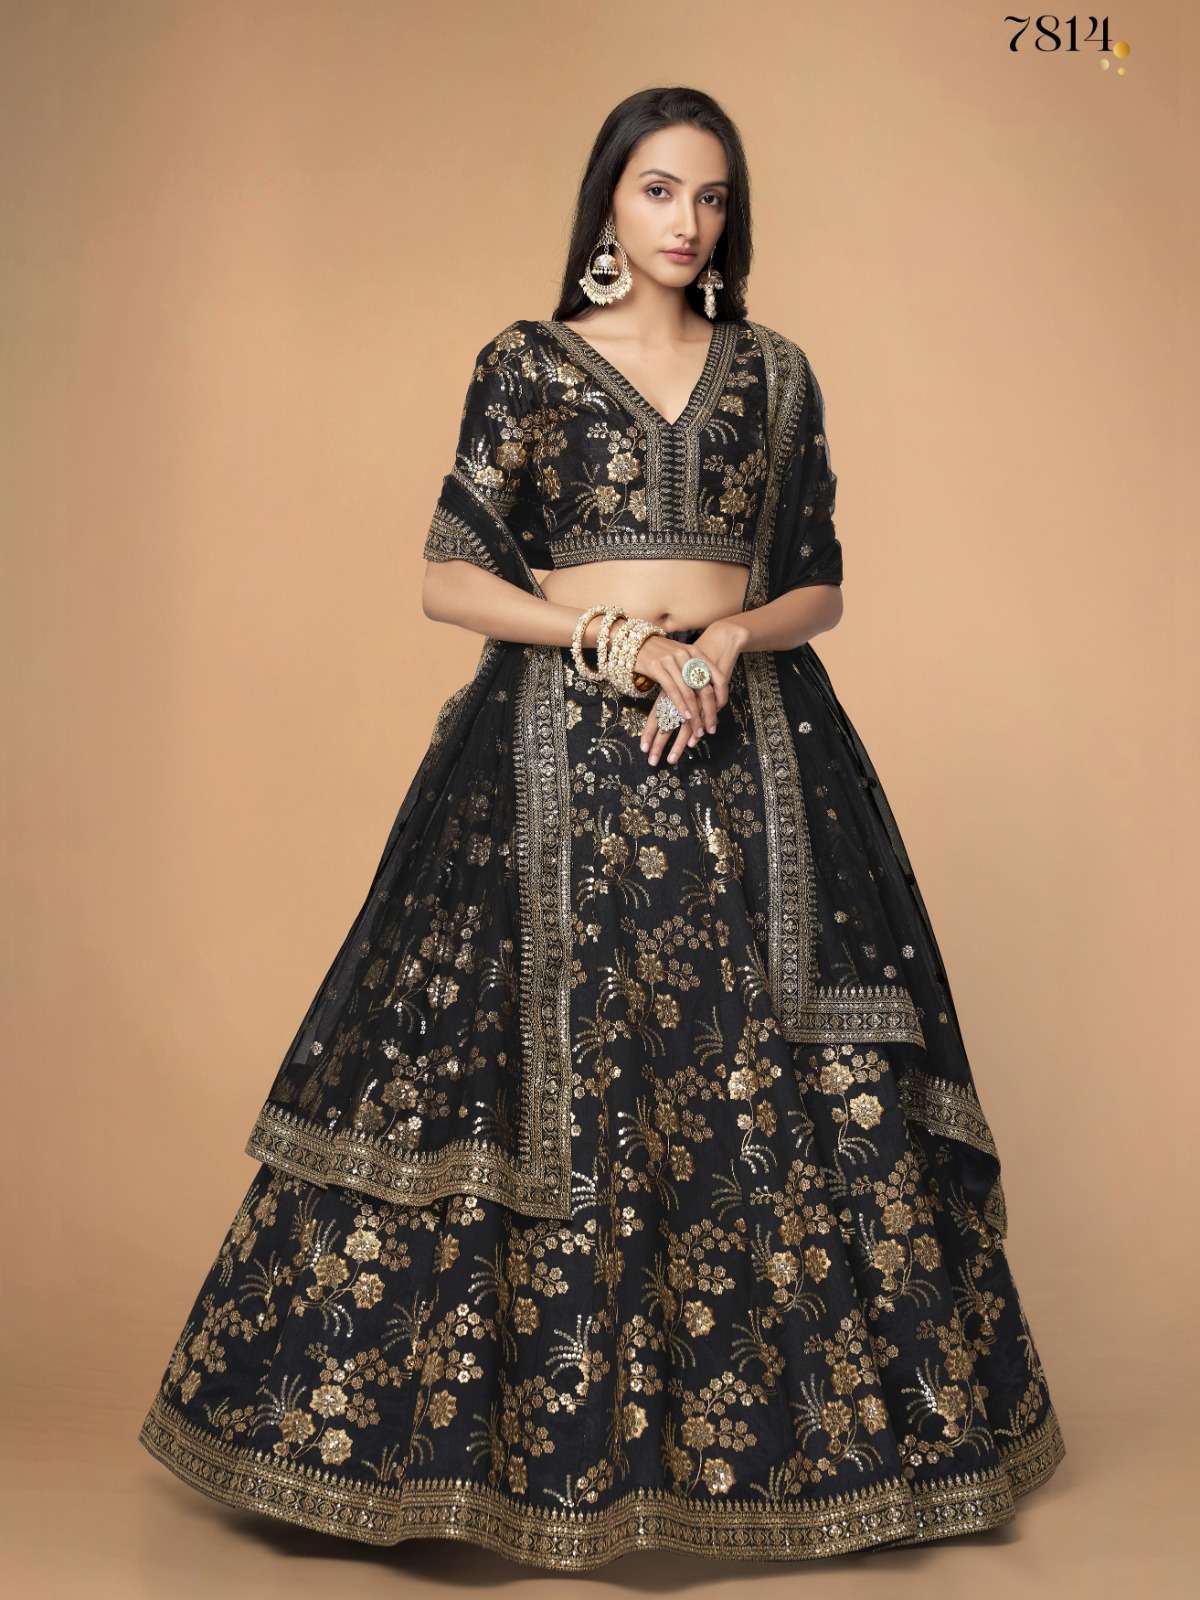 zeel 7814 beautiful black color wedding wear single lehenga choli 